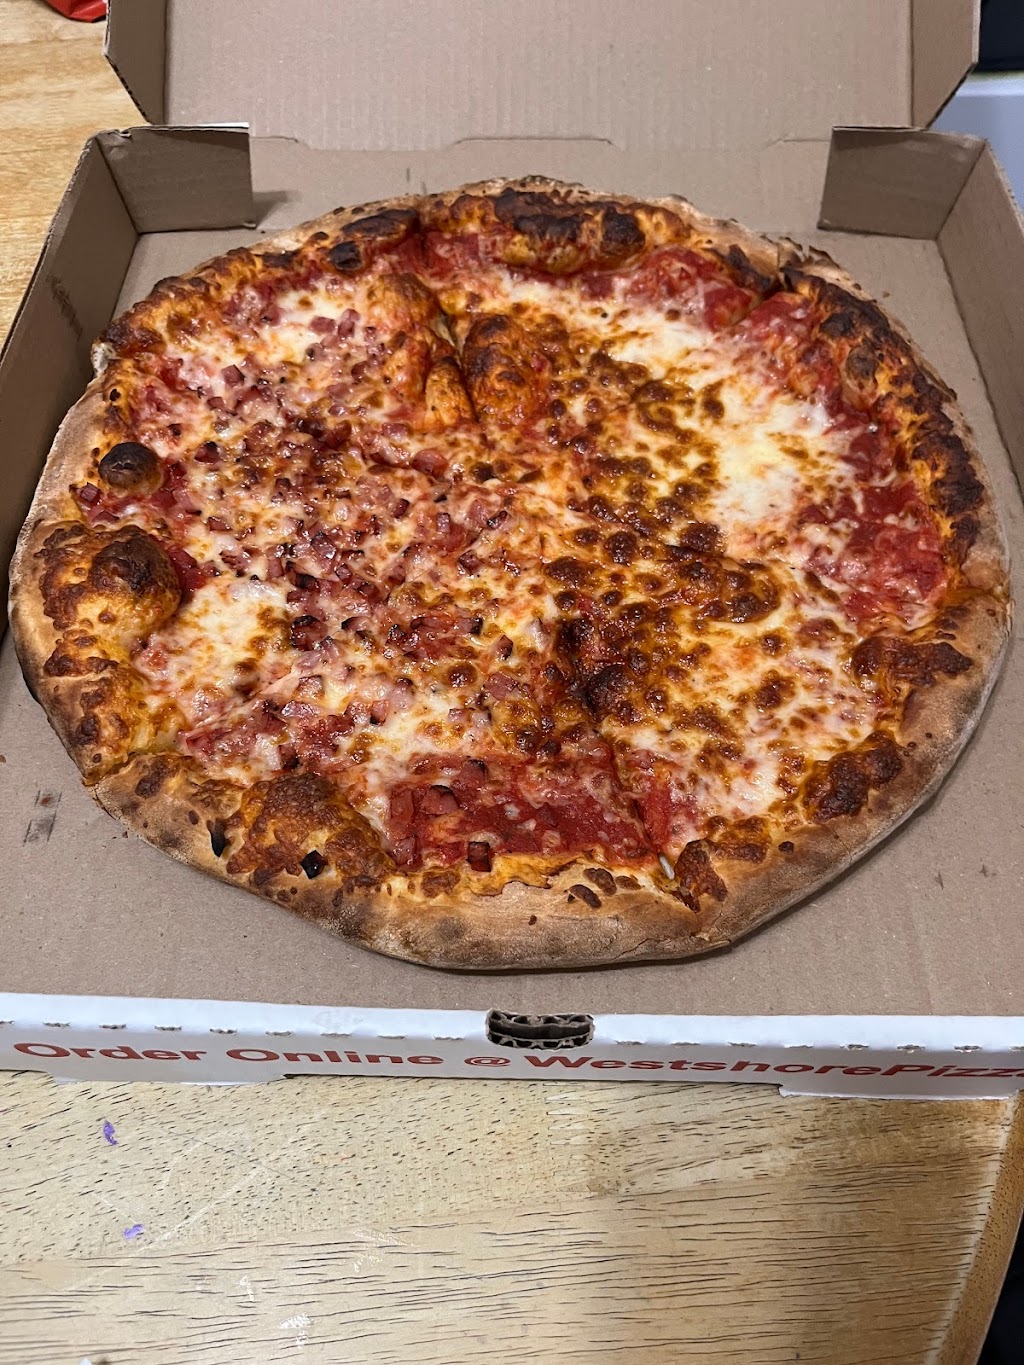 Westshore Pizza | 3900 S West Shore Blvd, Tampa, FL 33611, USA | Phone: (813) 832-5331